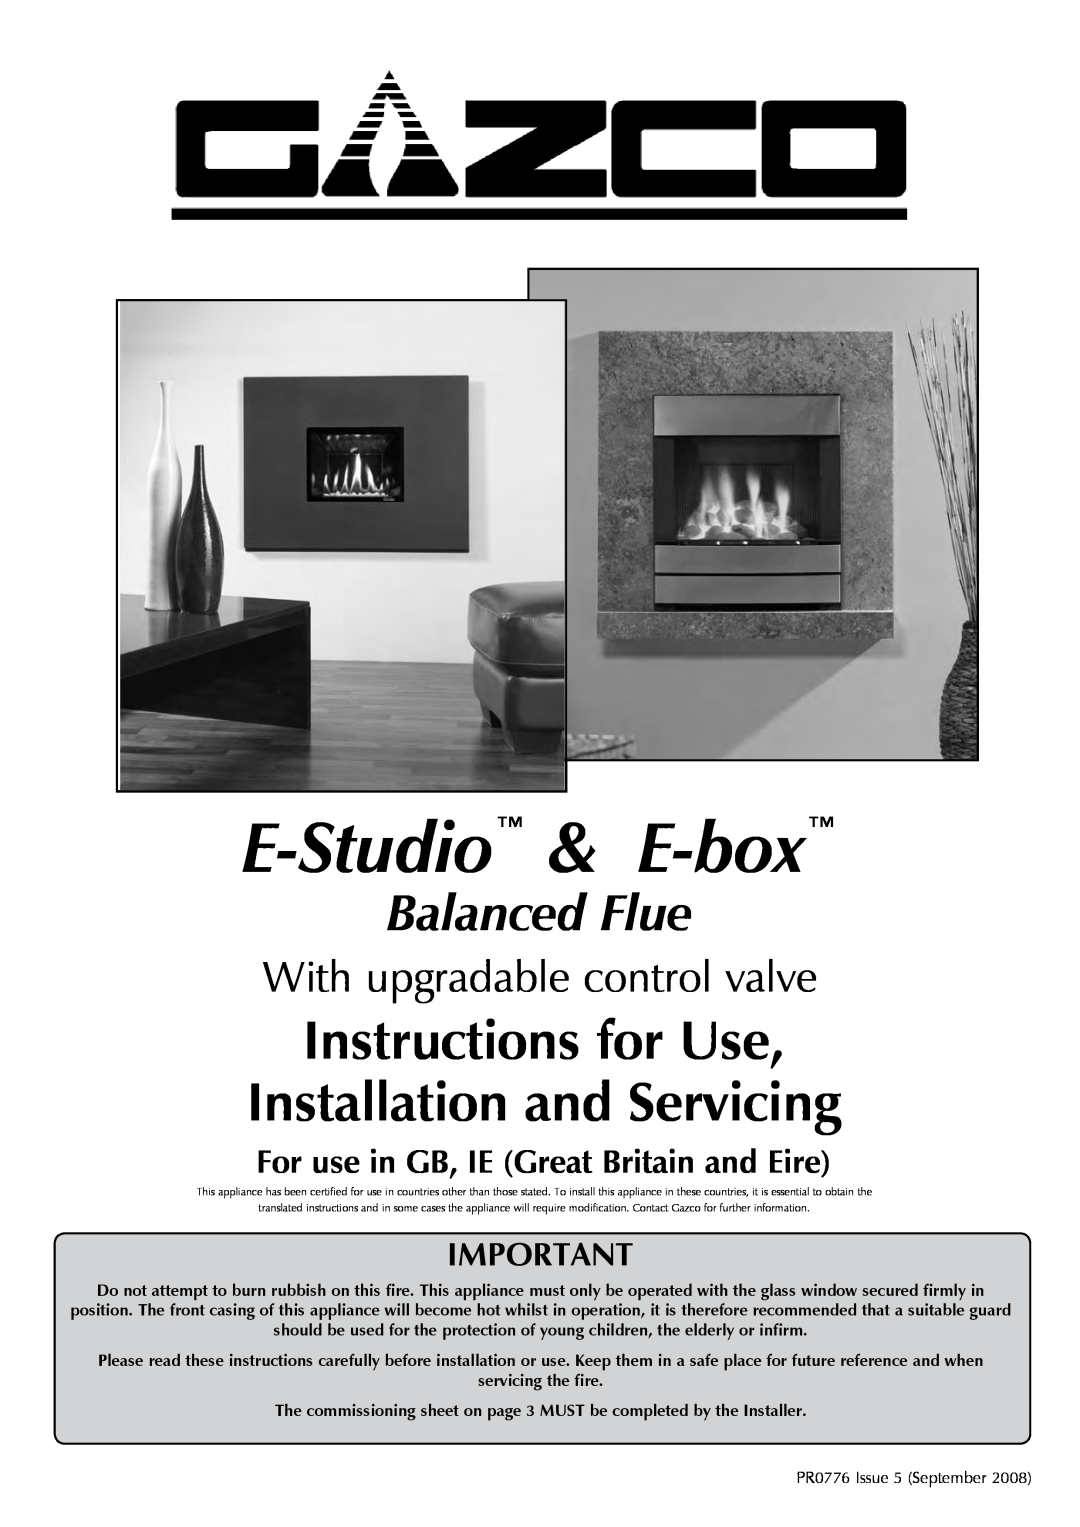 Stovax PR0776 manual E-Studio & E-box, Instructions for Use Installation and Servicing, Balanced Flue, servicing the fire 